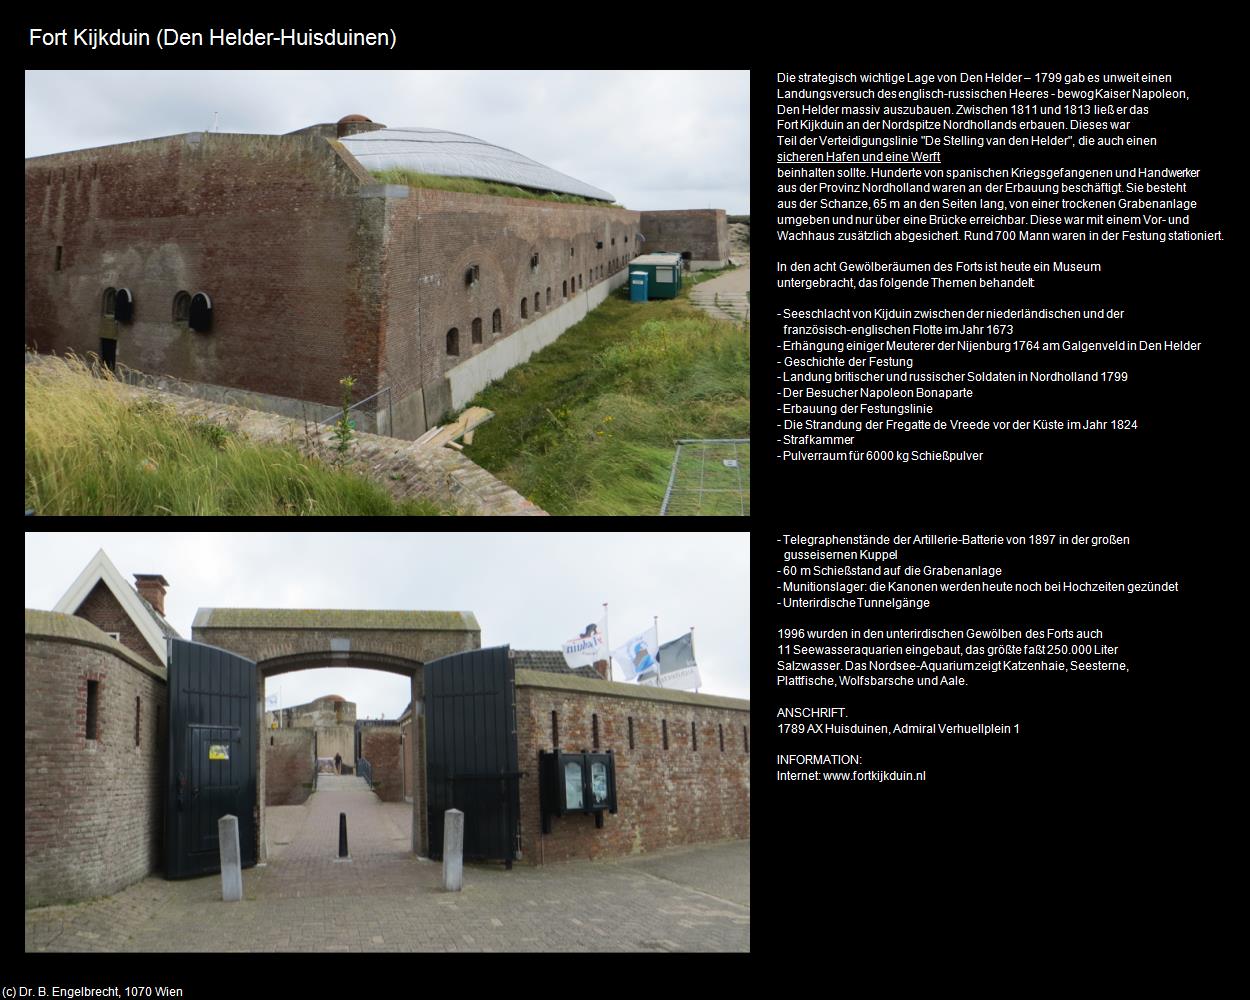 Fort Kijkduin (Huisduinen) (Den Helder) in Kulturatlas-NIEDERLANDE(c)B.Engelbrecht